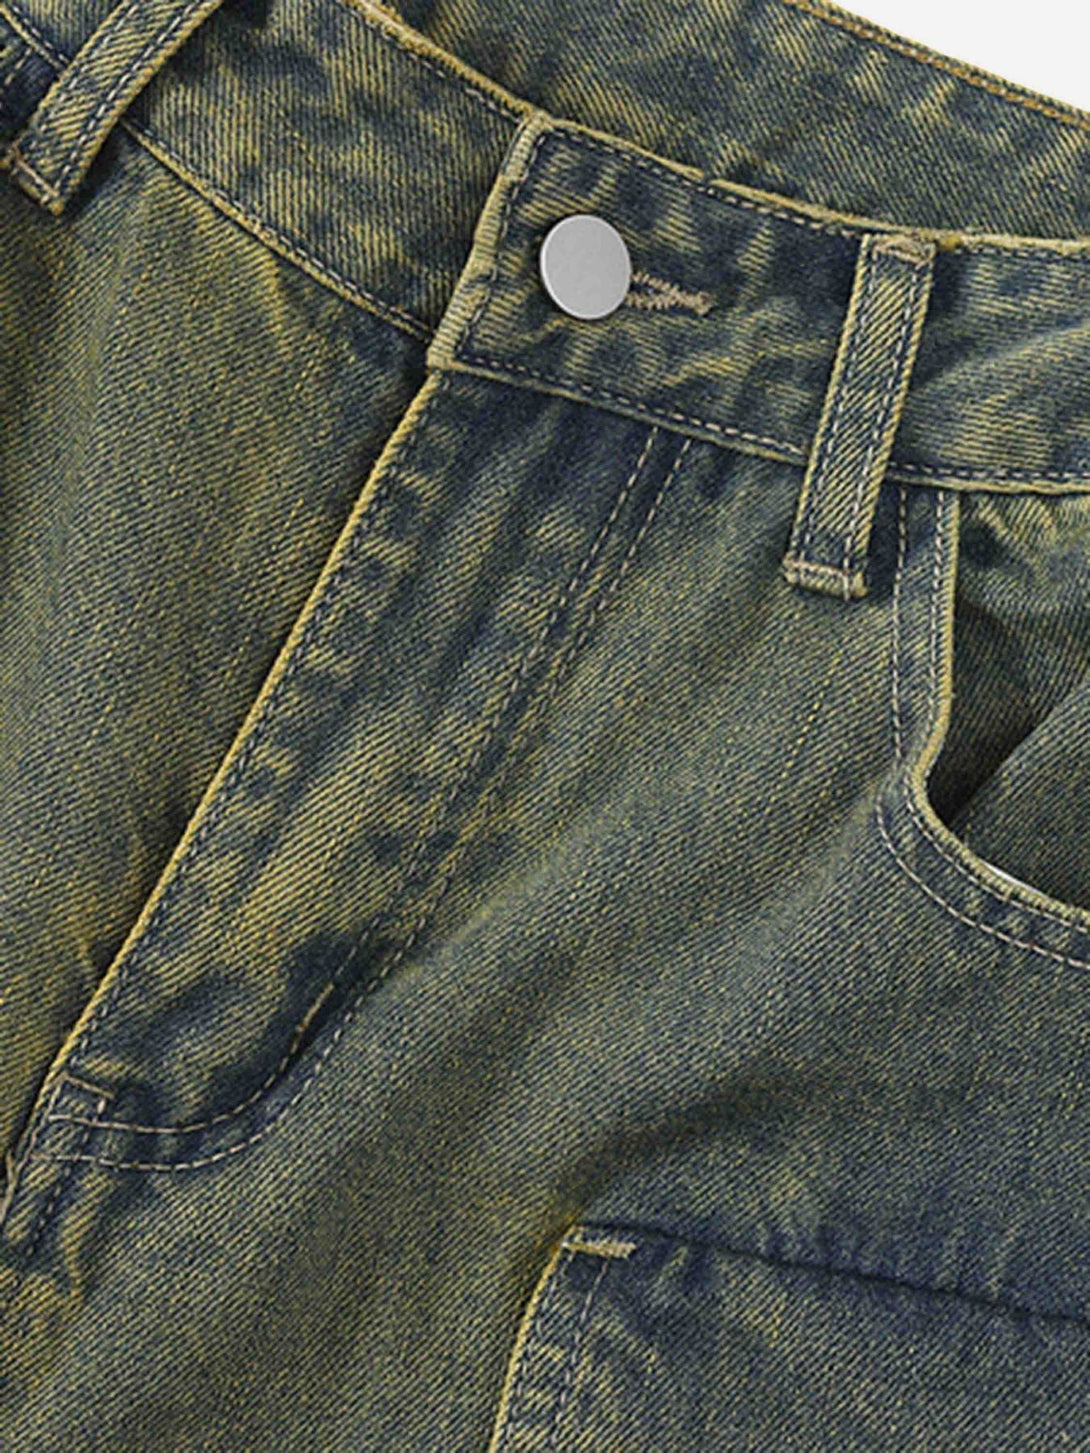 Majesda® - Multi-Pocket Workwear Loose Jeans - 1789- Outfit Ideas - Streetwear Fashion - majesda.com